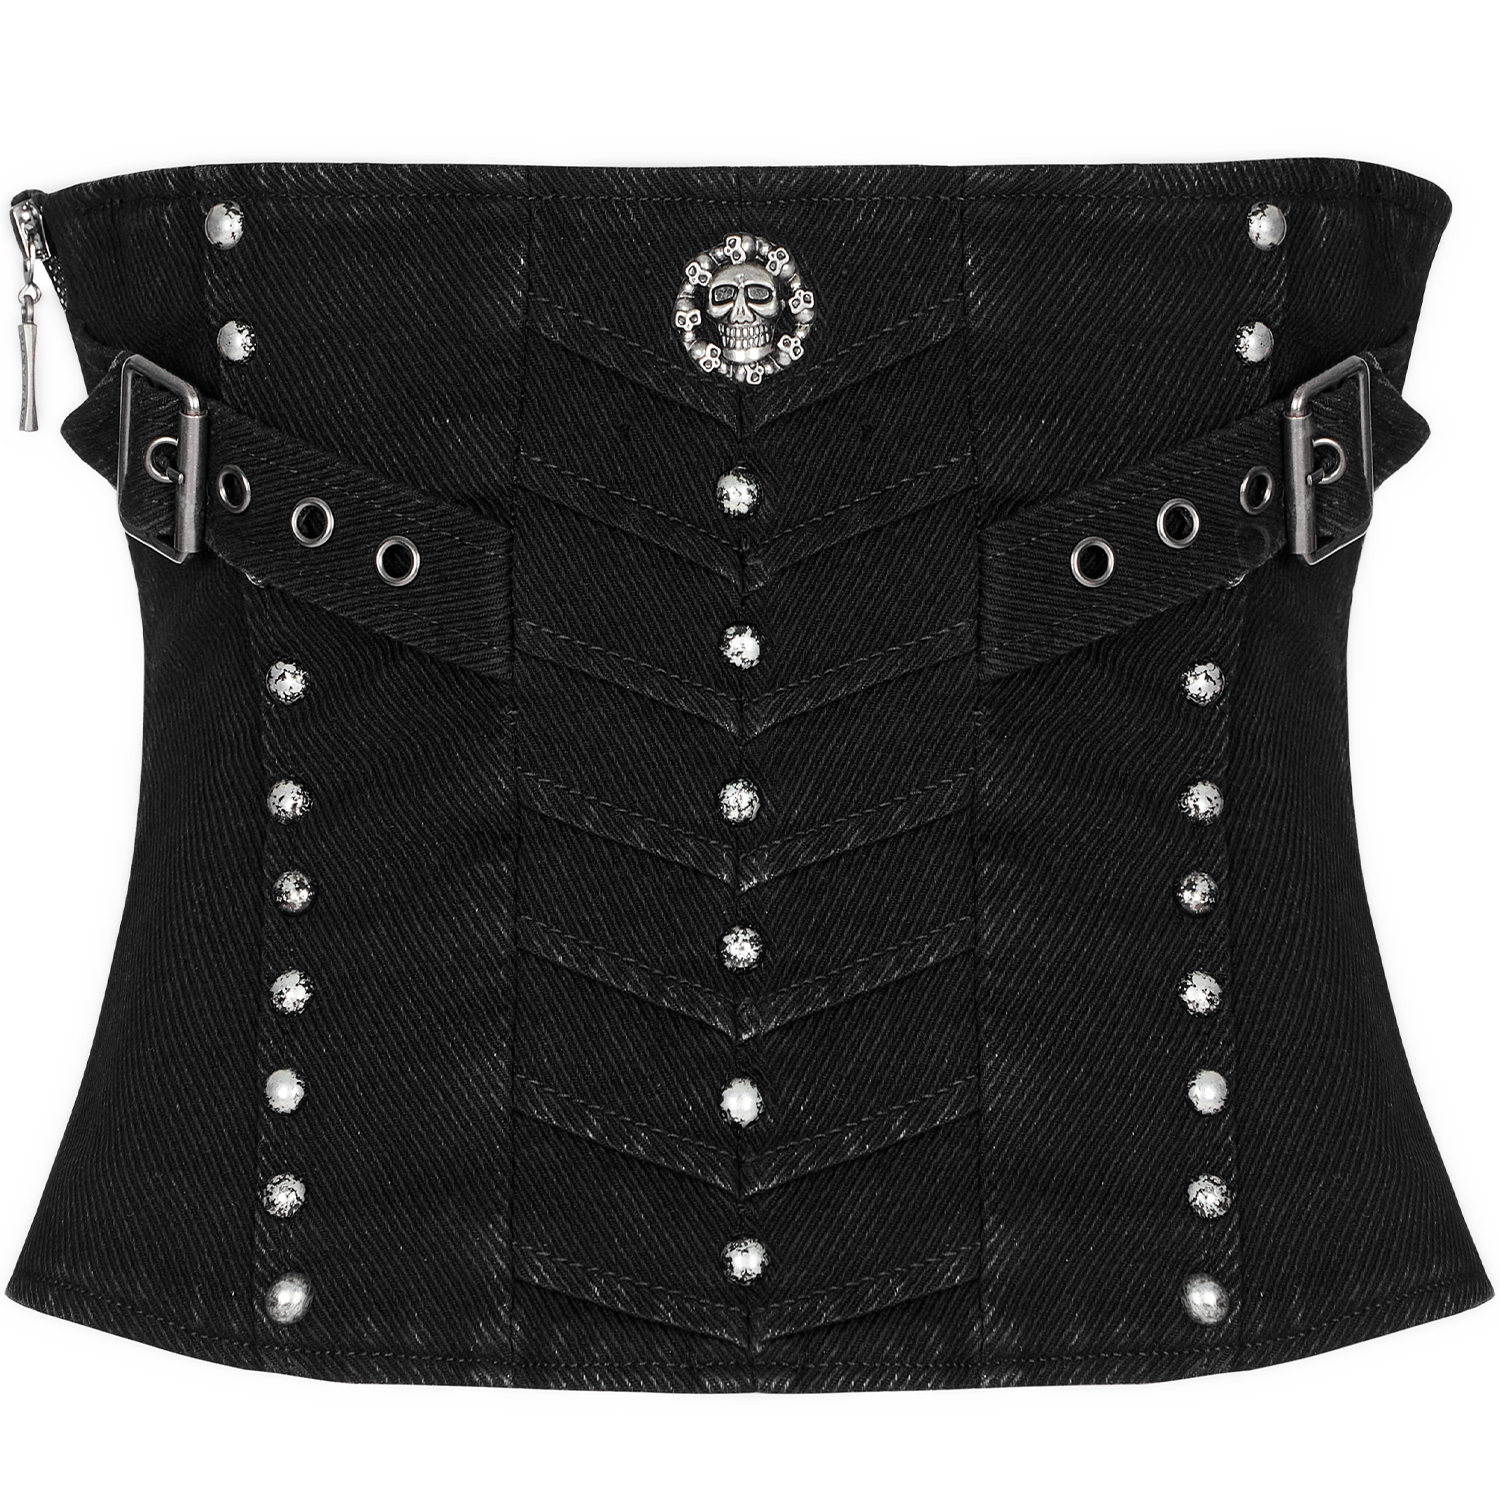 MADE TO ORDER - Elastic waist cincher belt in black satin (Size XS - XL)